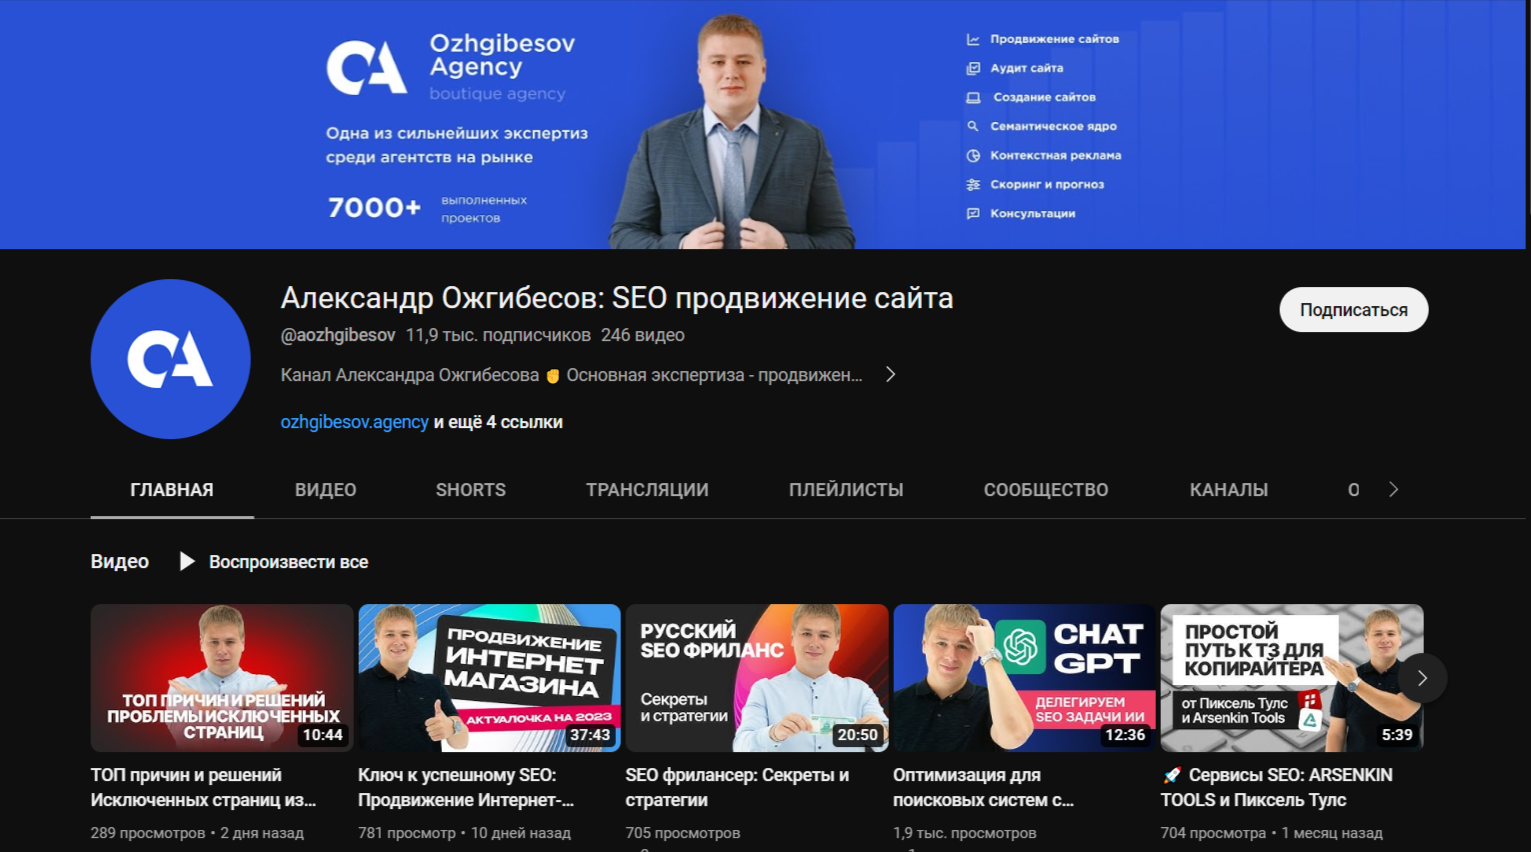 YouTube канал Ожгибесов